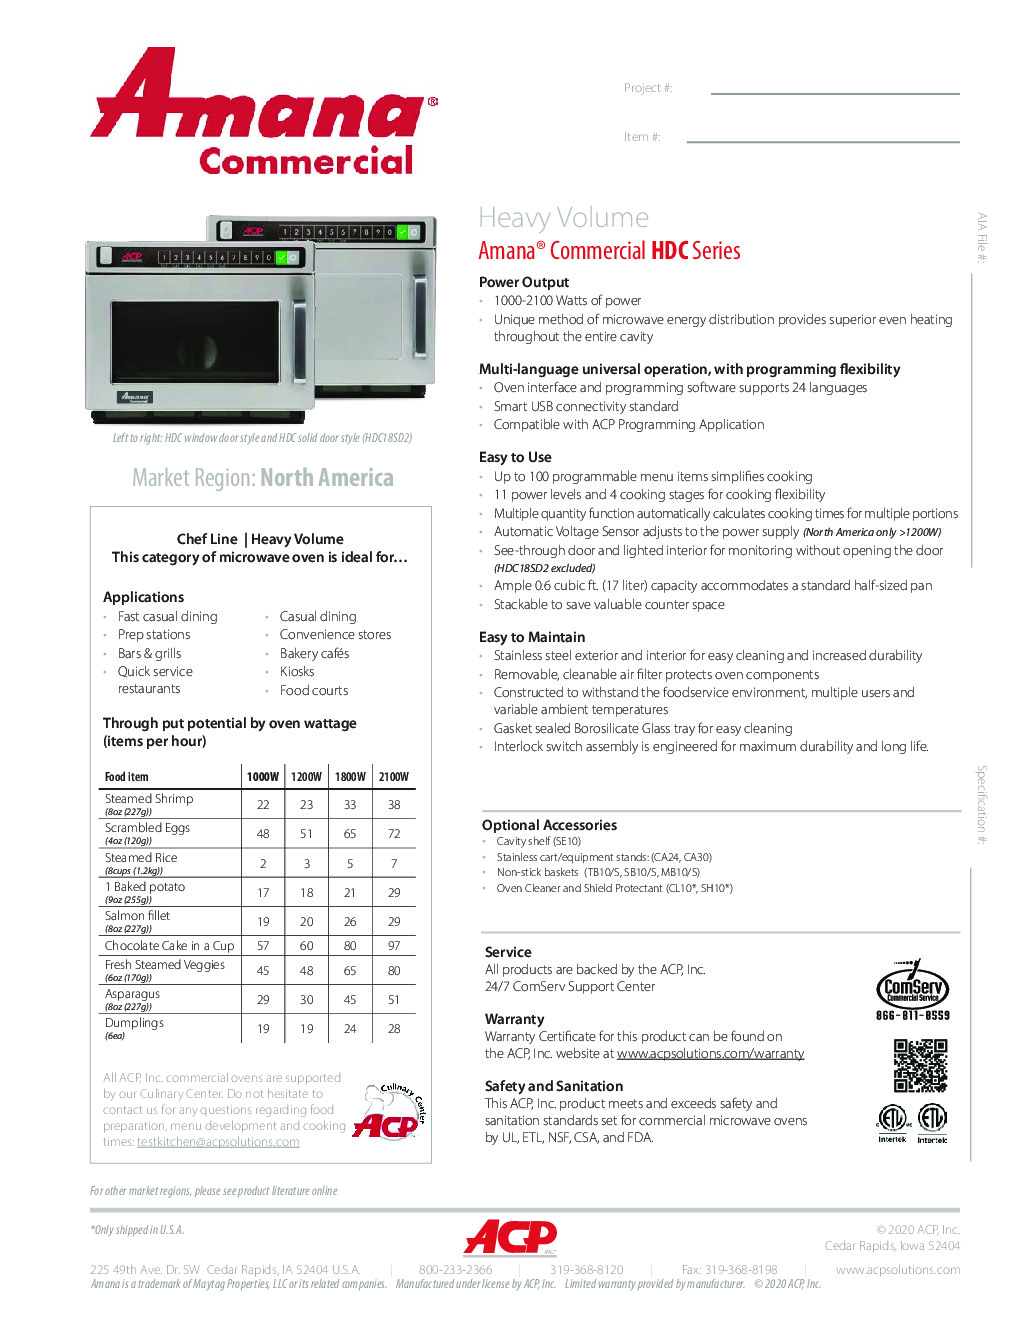 Amana HDC1015 Microwave Oven